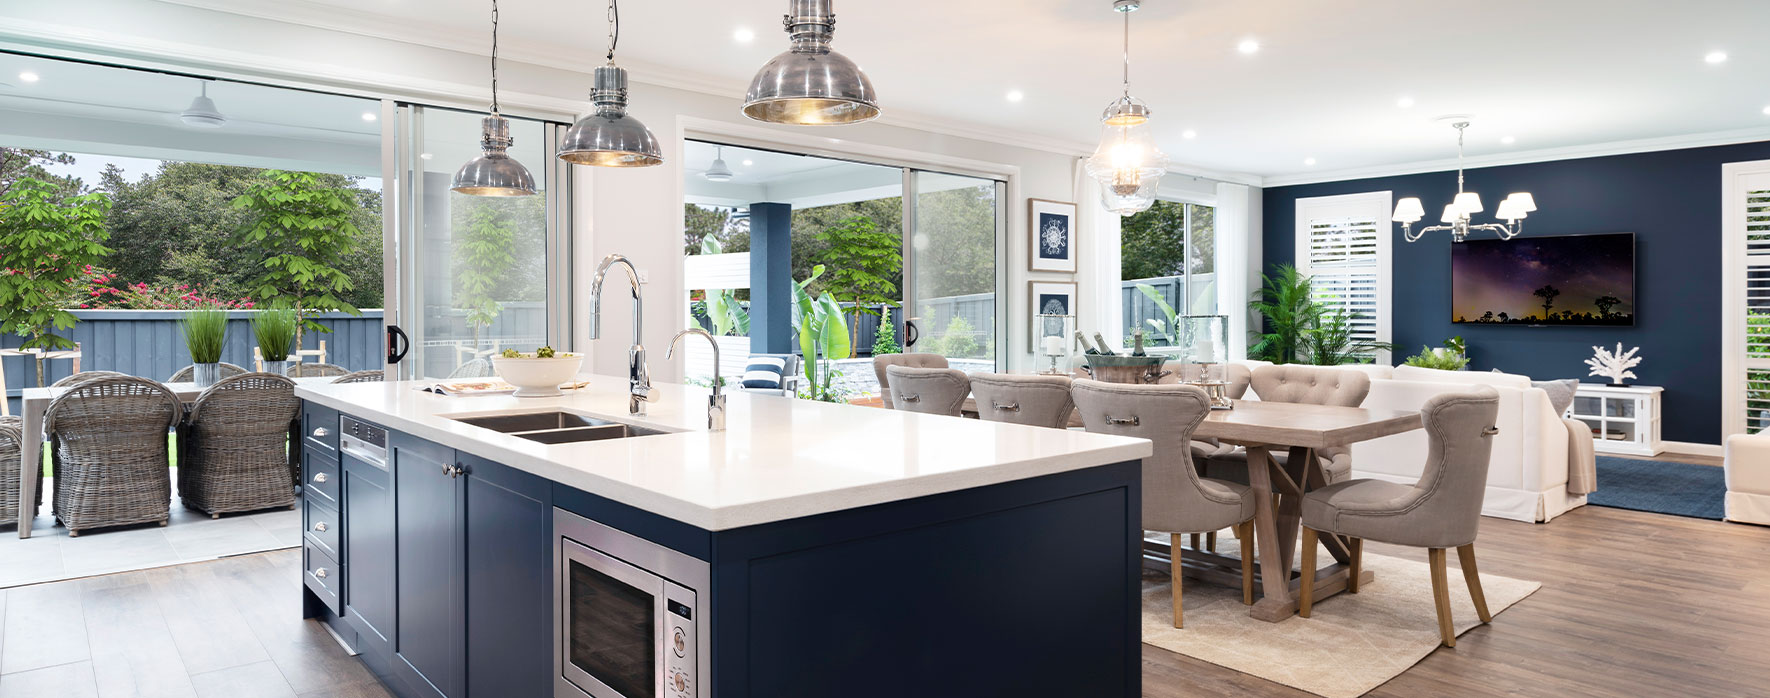 enigma-46-double-storey-home-design-on-display-kitchen